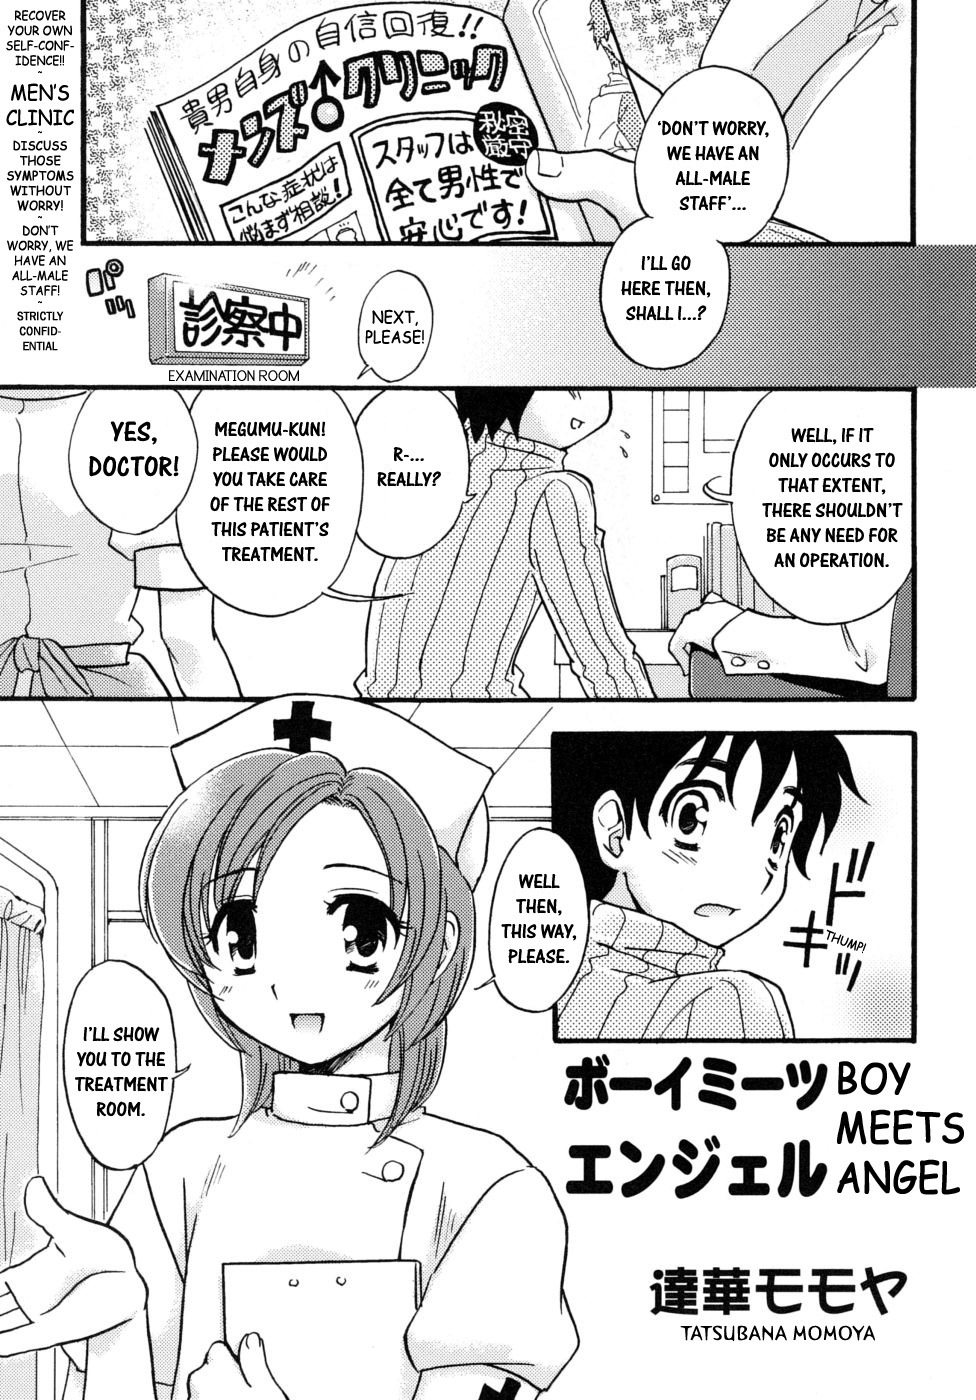 Boy Meets Angel ENG hentai manga